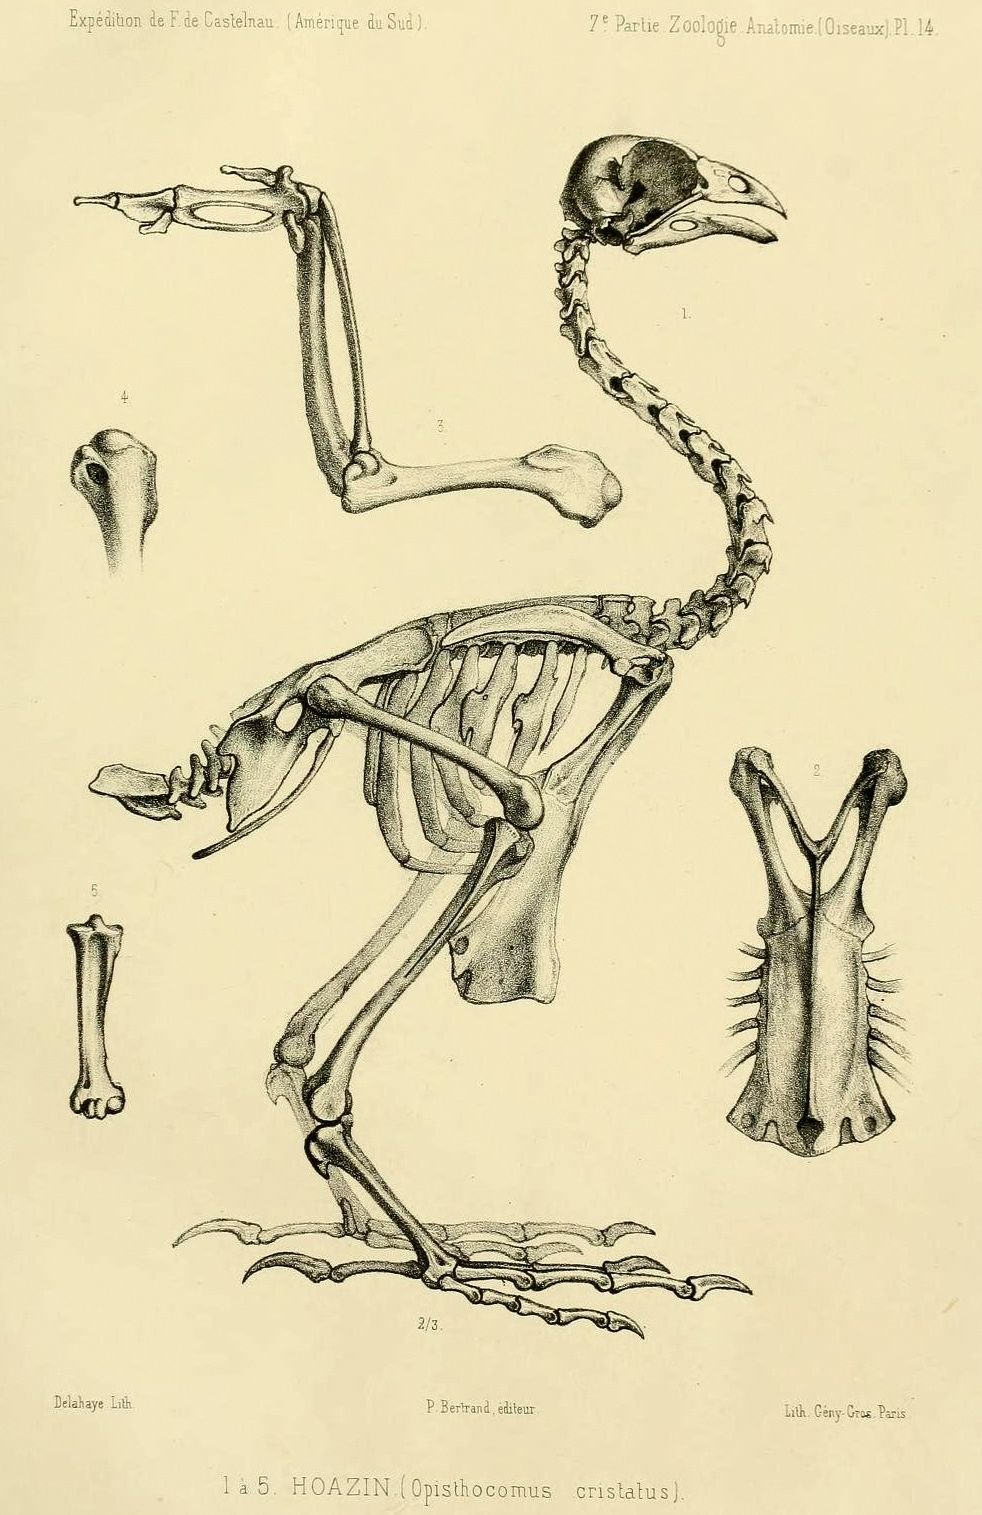 Особенности строения скелета в жизни птицы. Скелет гоацина. Анатомия гоацина. Птенец гоацина скелет. Анатомия скелета крыла птицы.